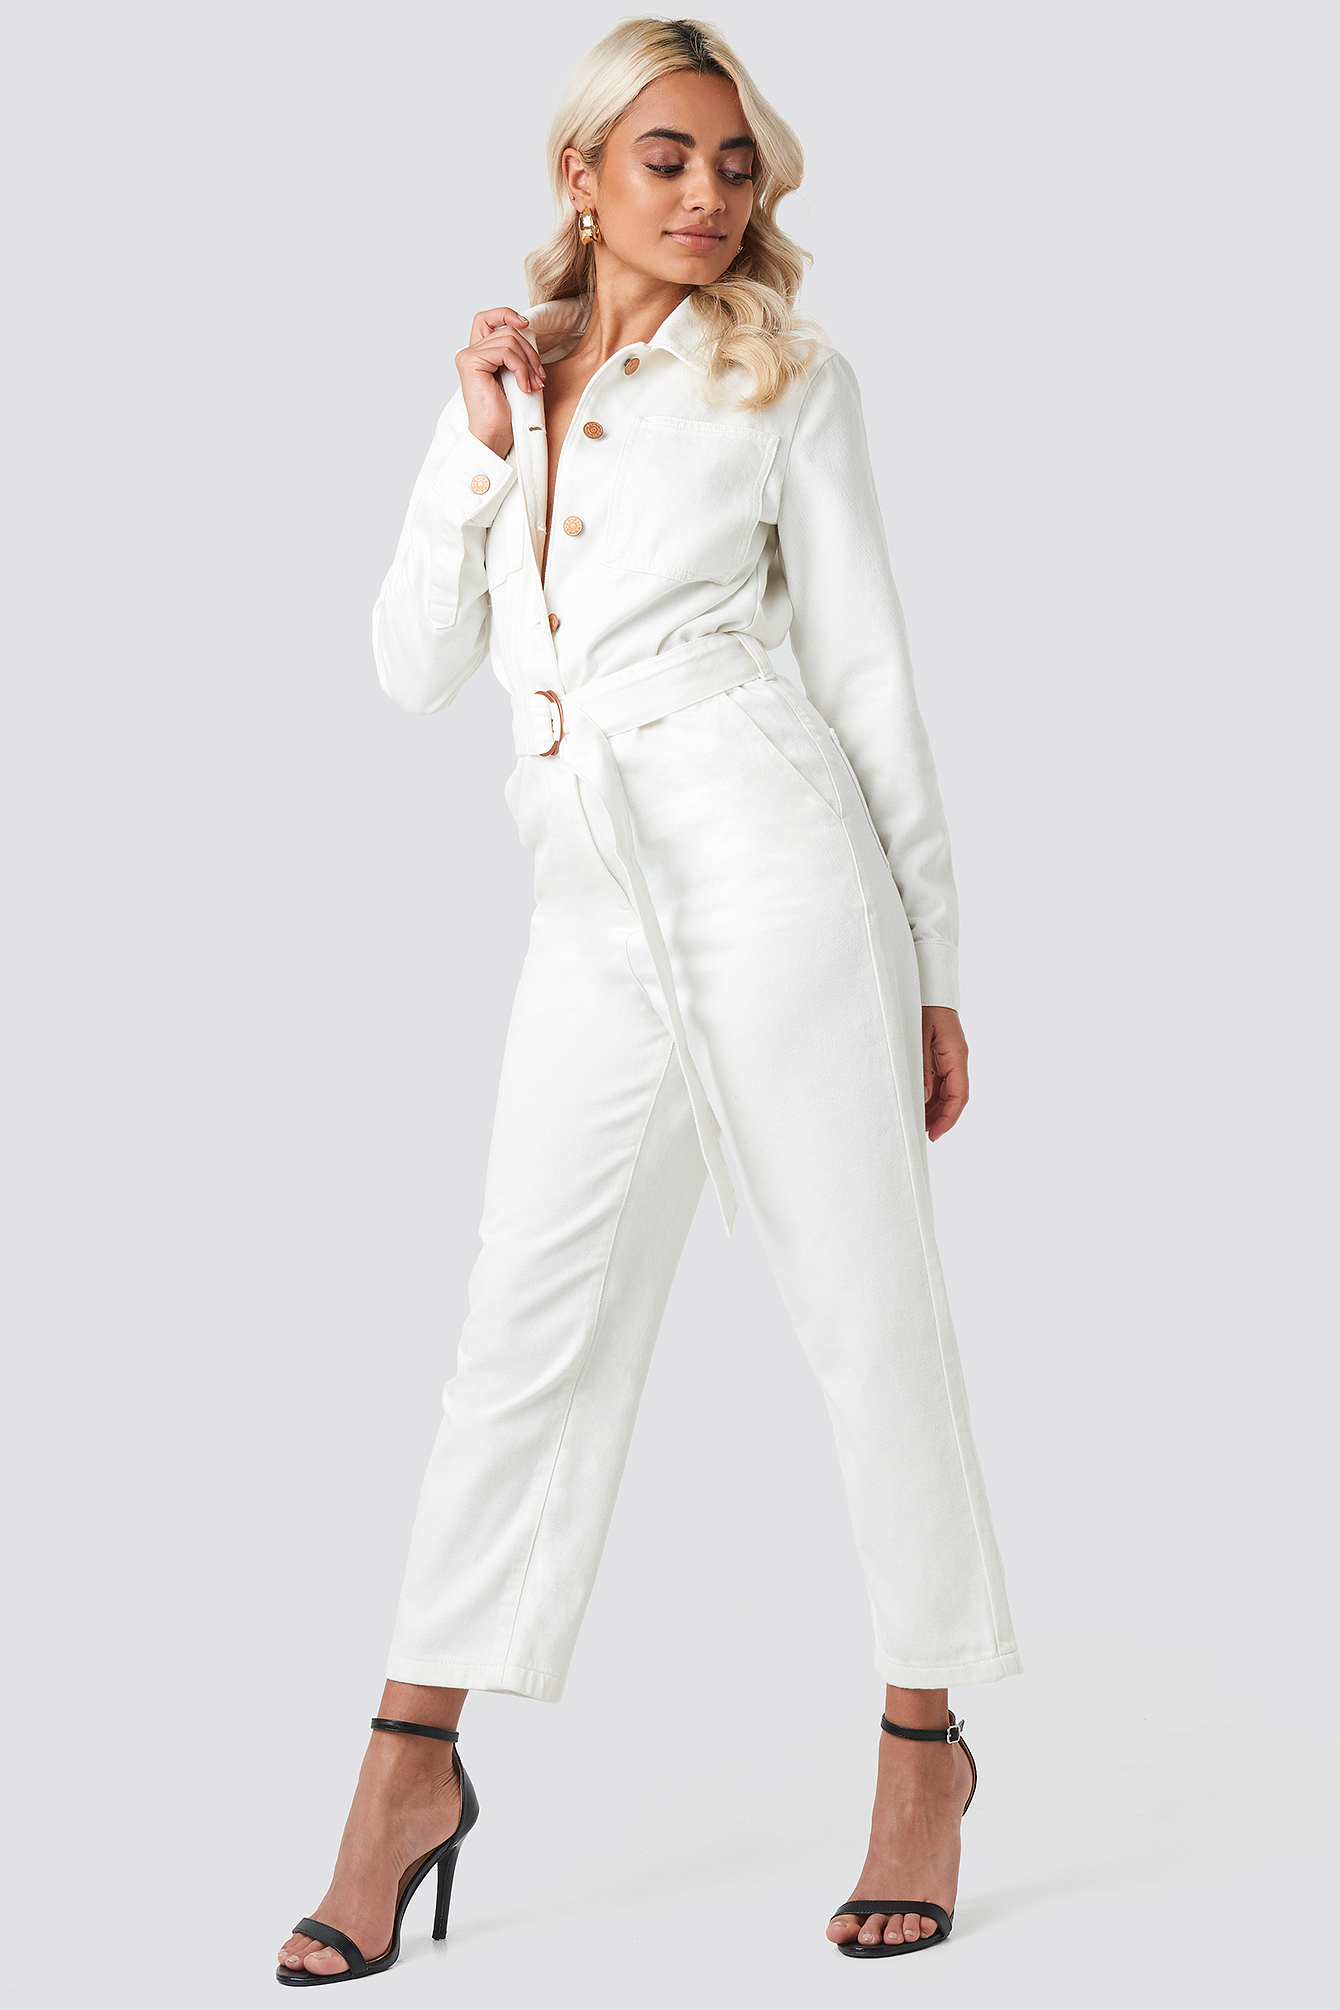 all white denim jumpsuit